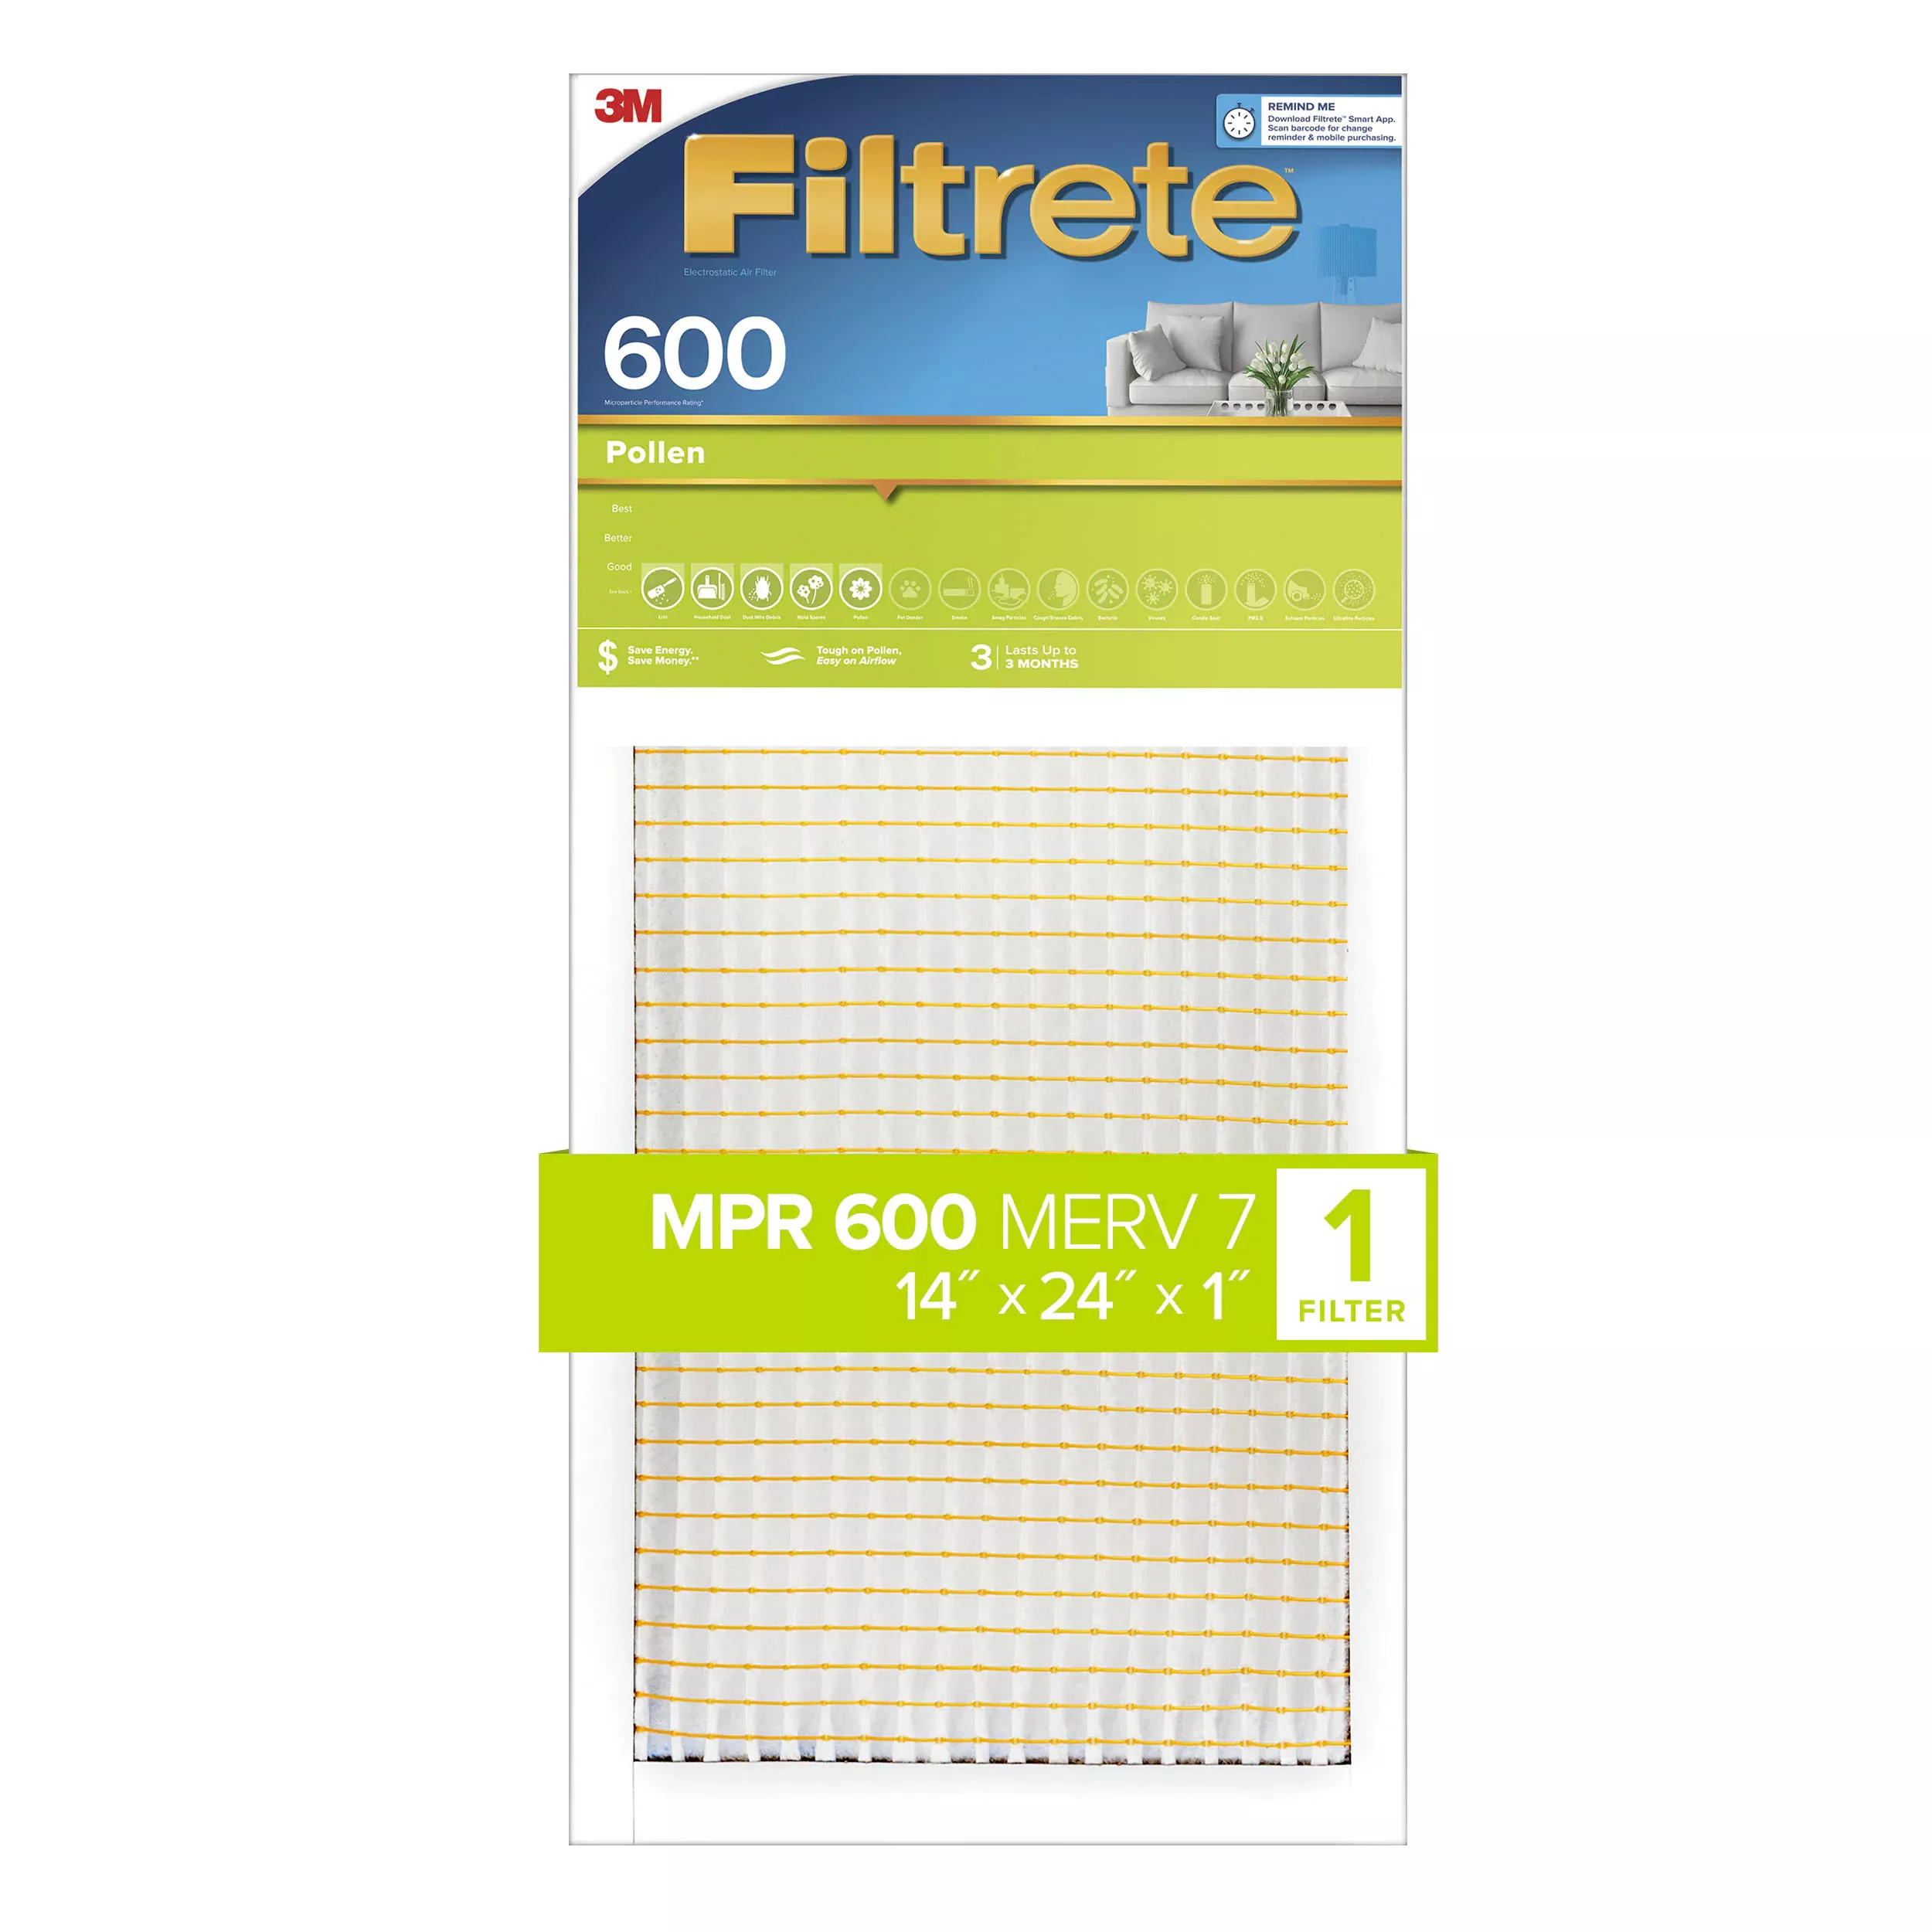 Filtrete™ Electrostatic Air Filter 600MPR 9863DC-4, 14 in x 24 in x 1 in (35.5 cm x 60.9 cm x 2.5 cm)